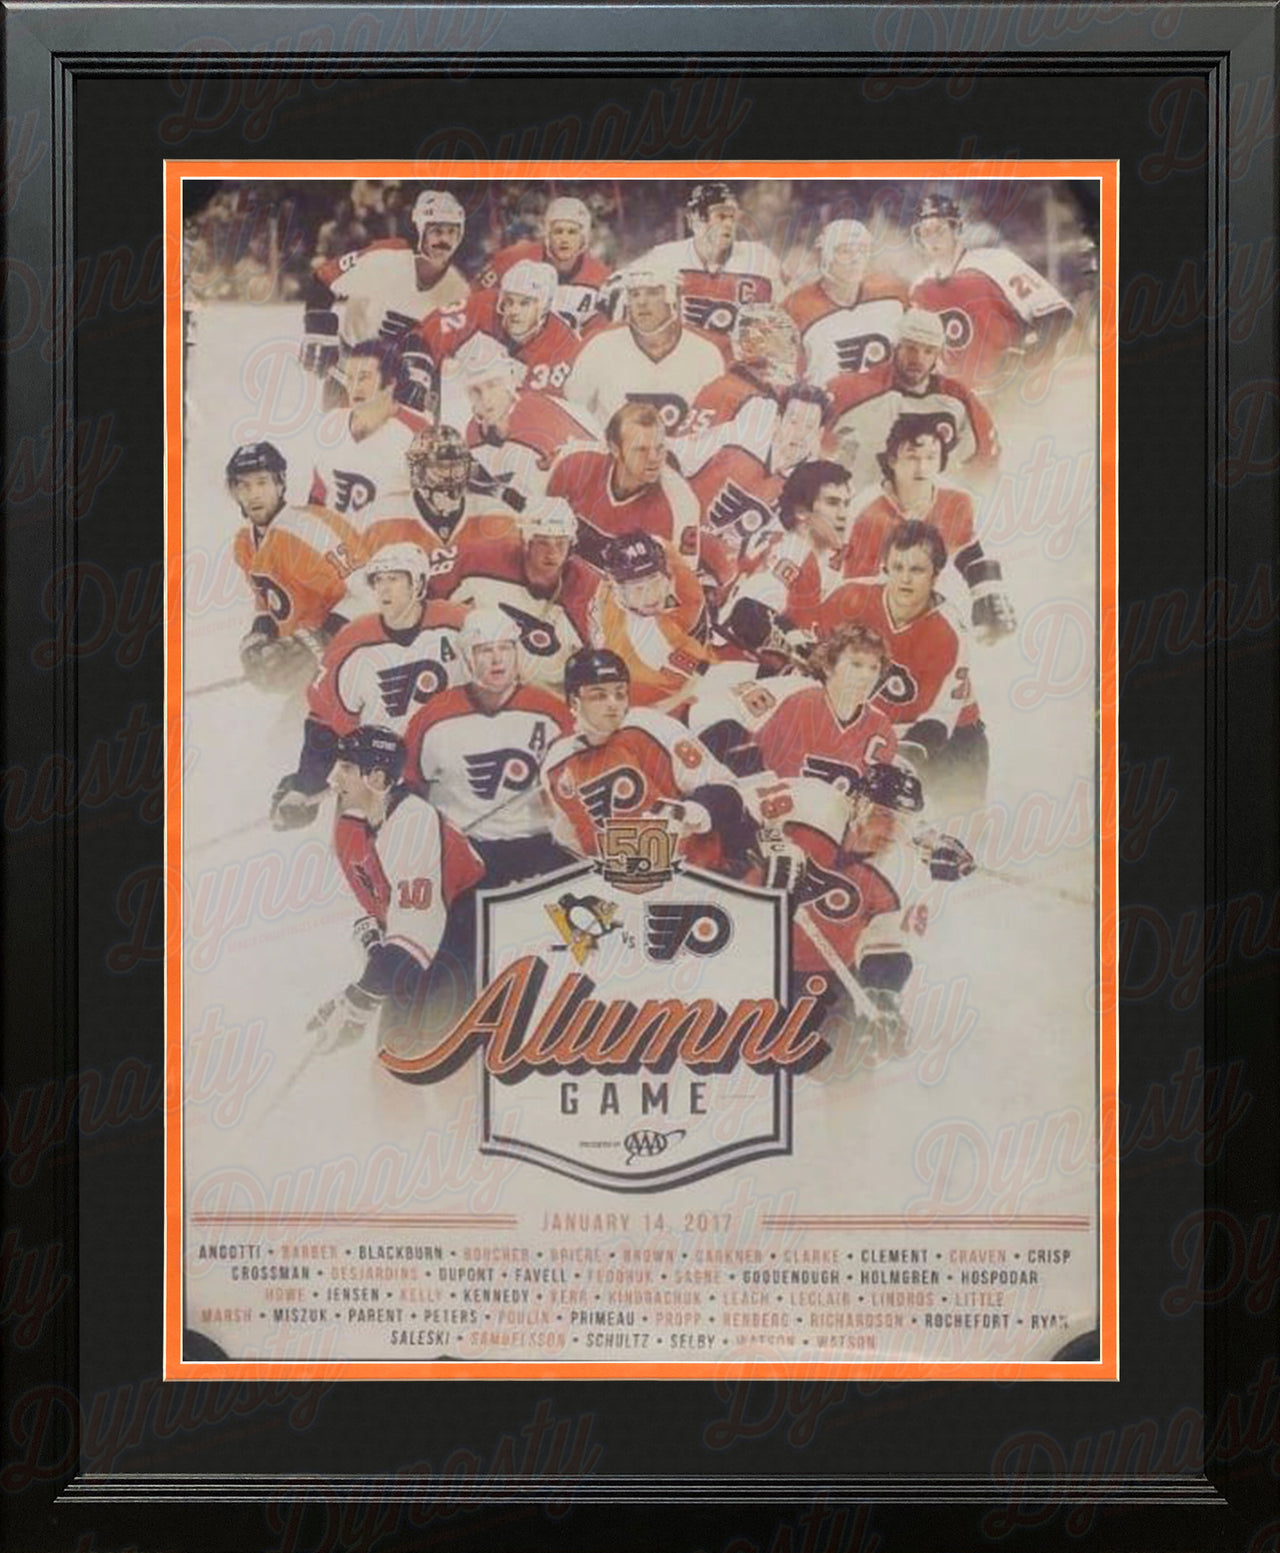 Philadelphia Flyers 2017 Alumni Game Limited Edition NHL Hockey Framed Team Poster - Dynasty Sports & Framing 